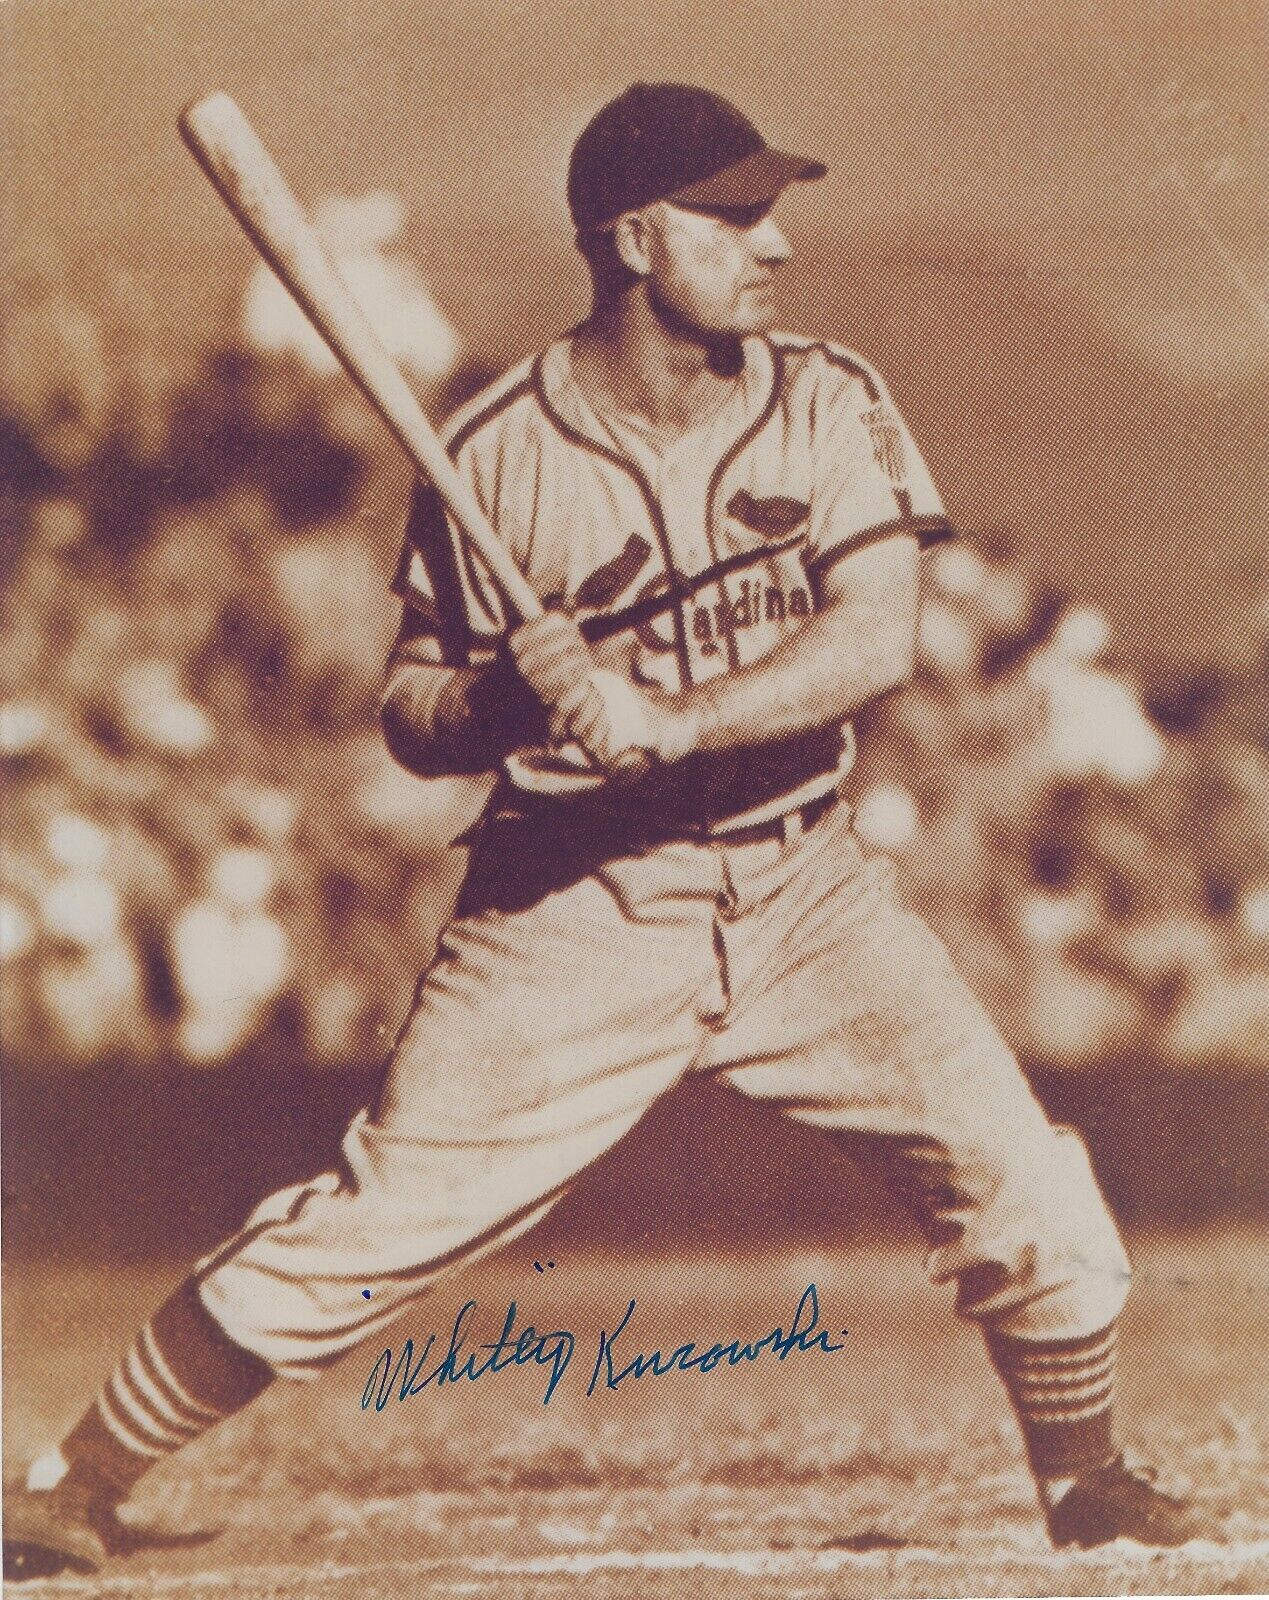 Autographed WHITEY KUROWSKI 8x10 St Louis Cardinals Photo Poster painting - COA